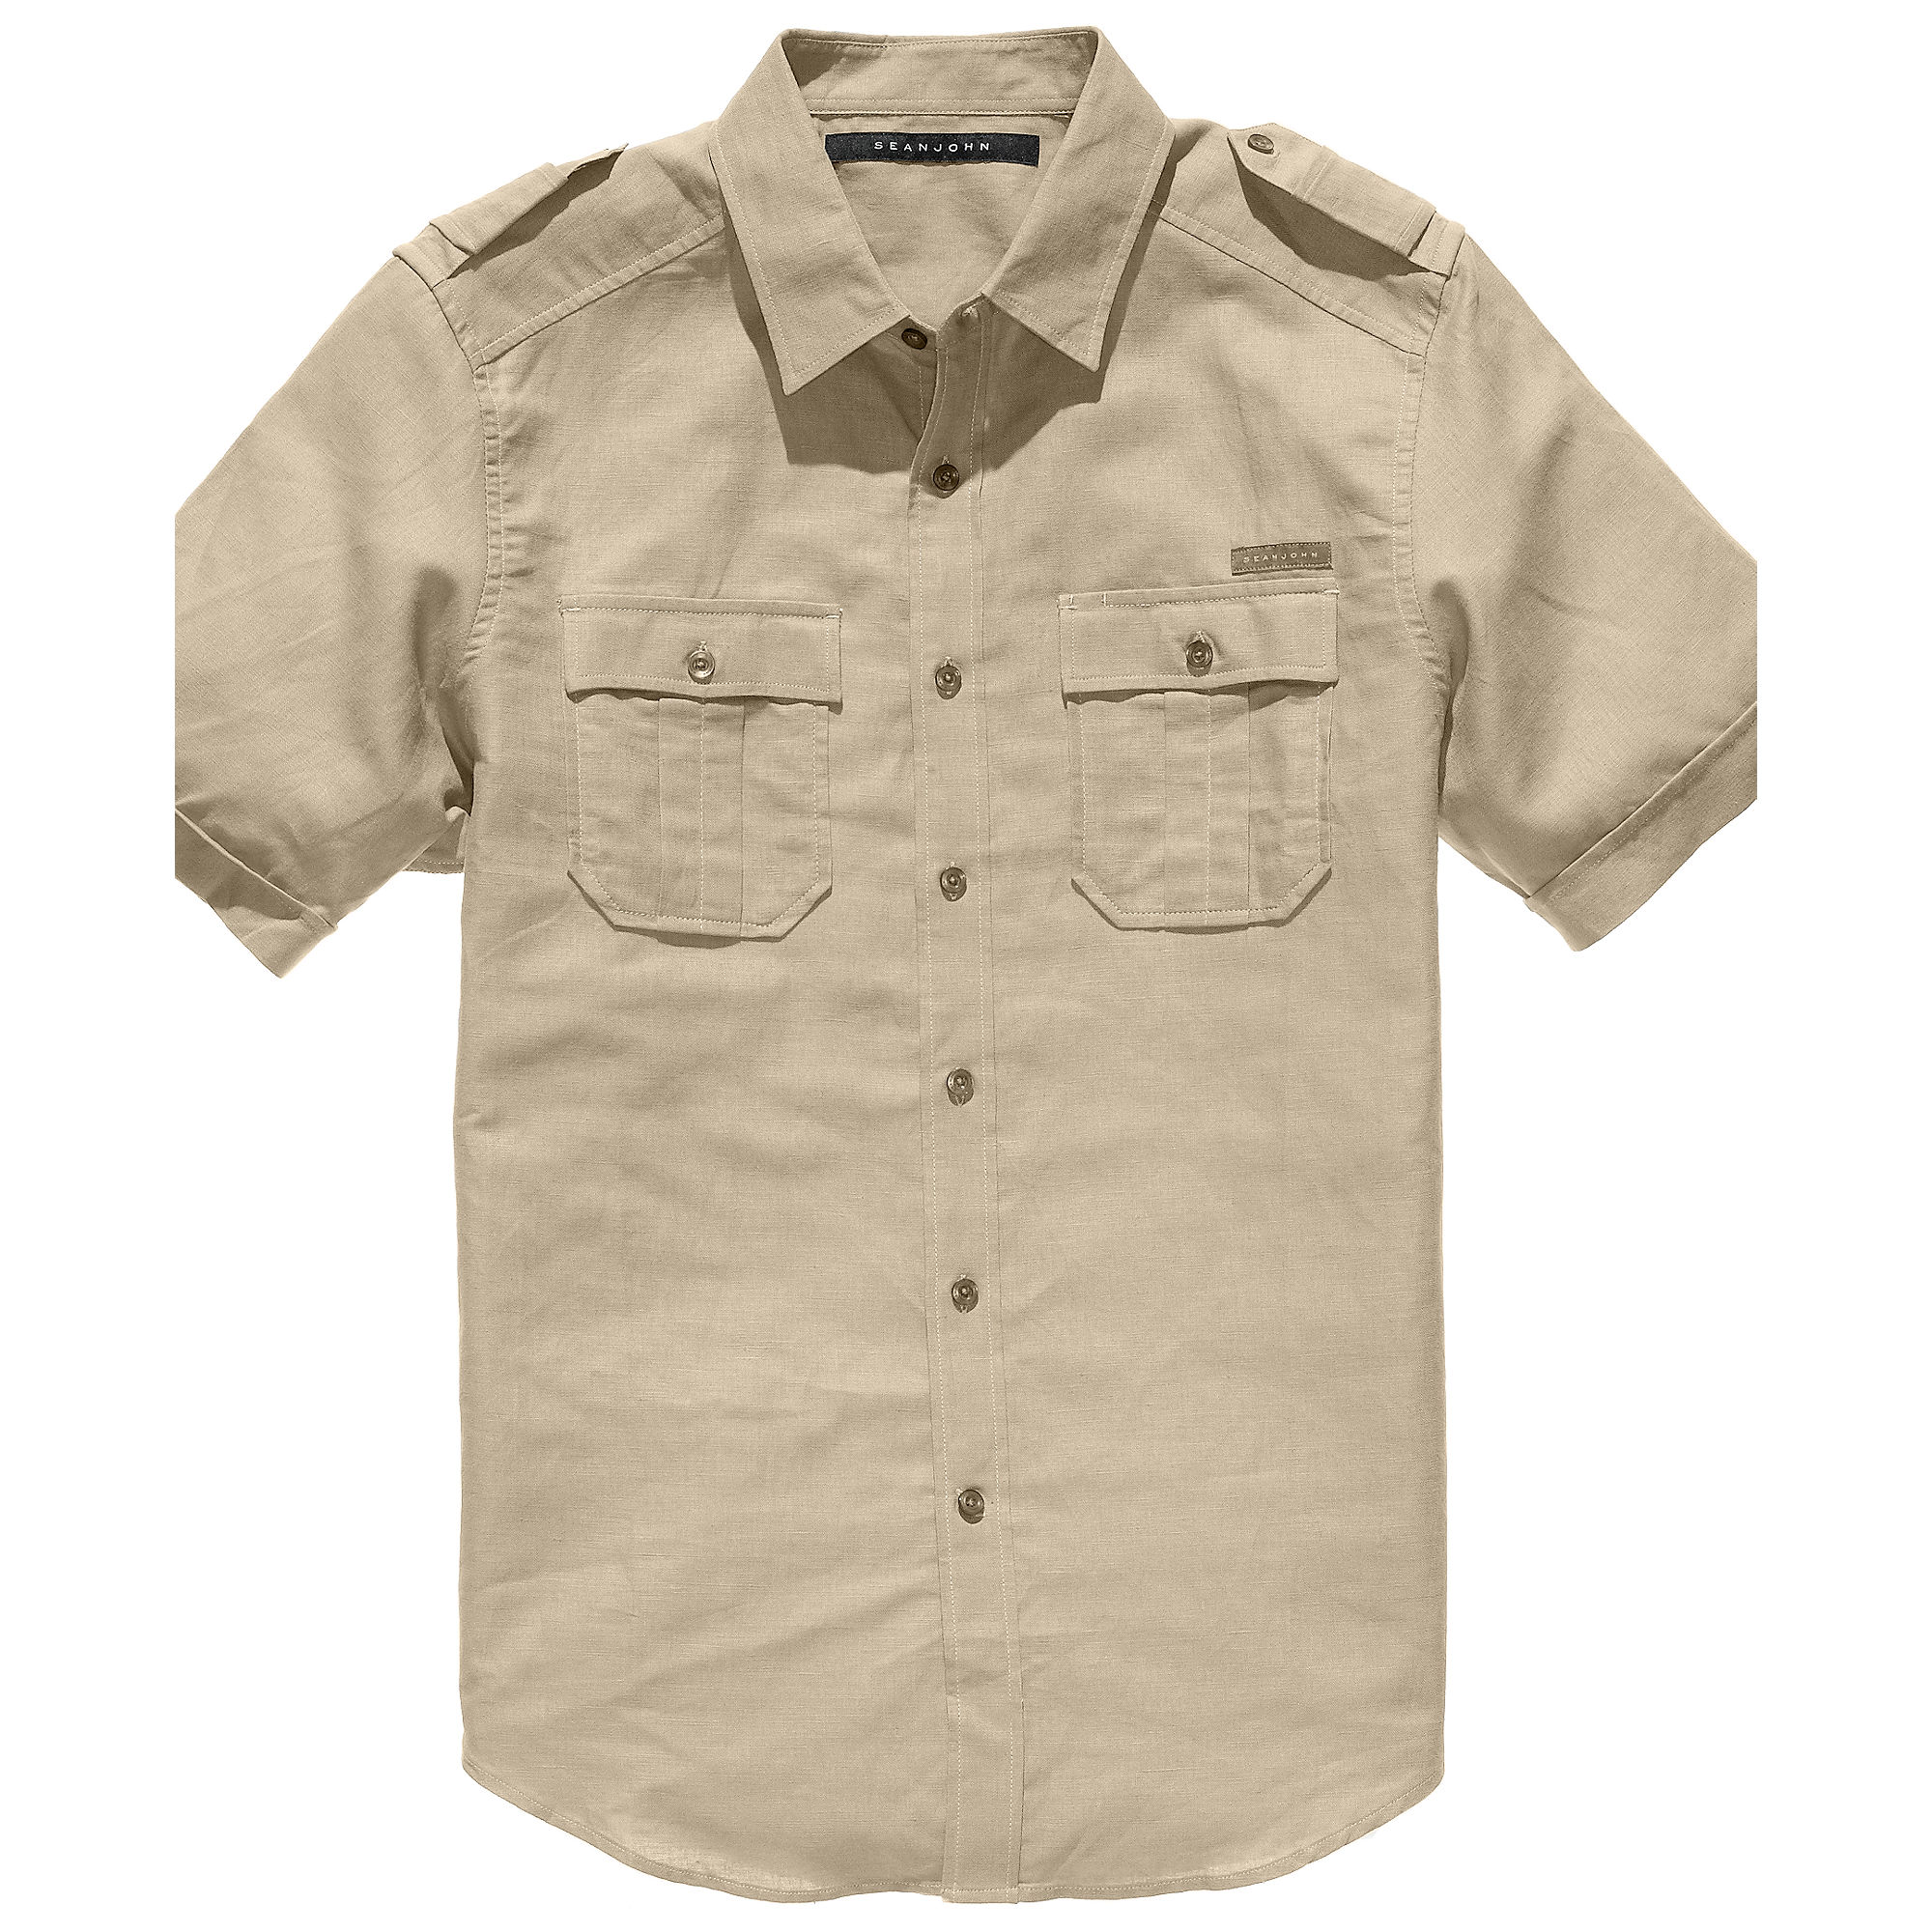 Lyst - Sean John Short Sleeved Linen Shirt in Natural for Men